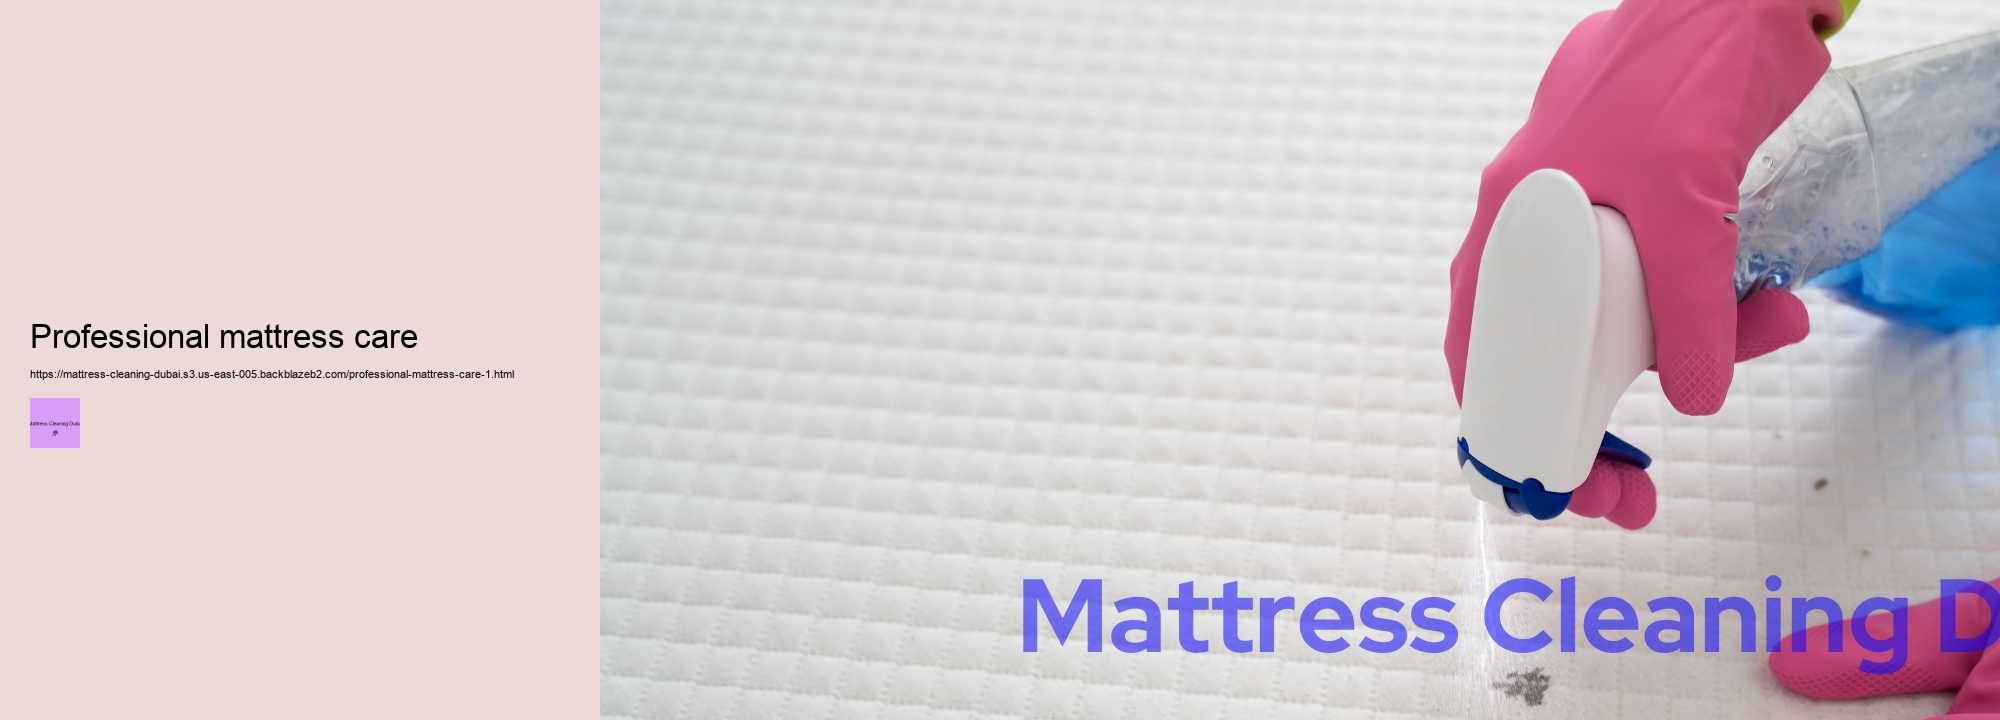 Professional mattress care